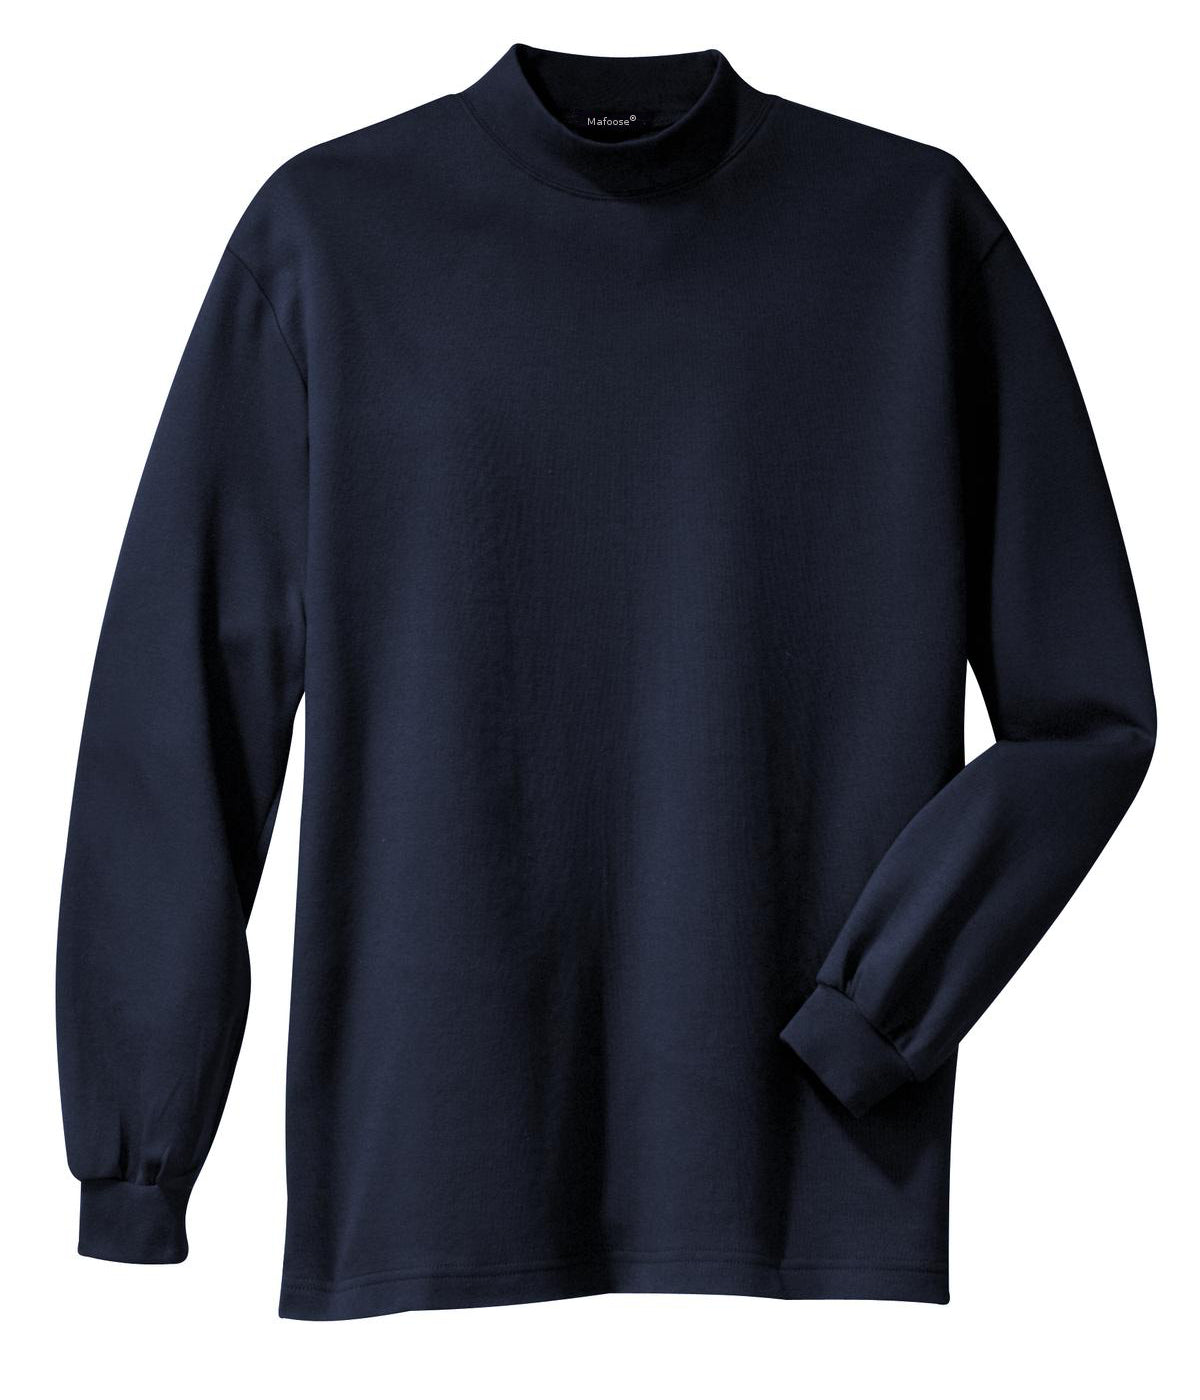 Mafoose Men's Interlock Knit Mock Turtleneck Sweaters Navy-Front